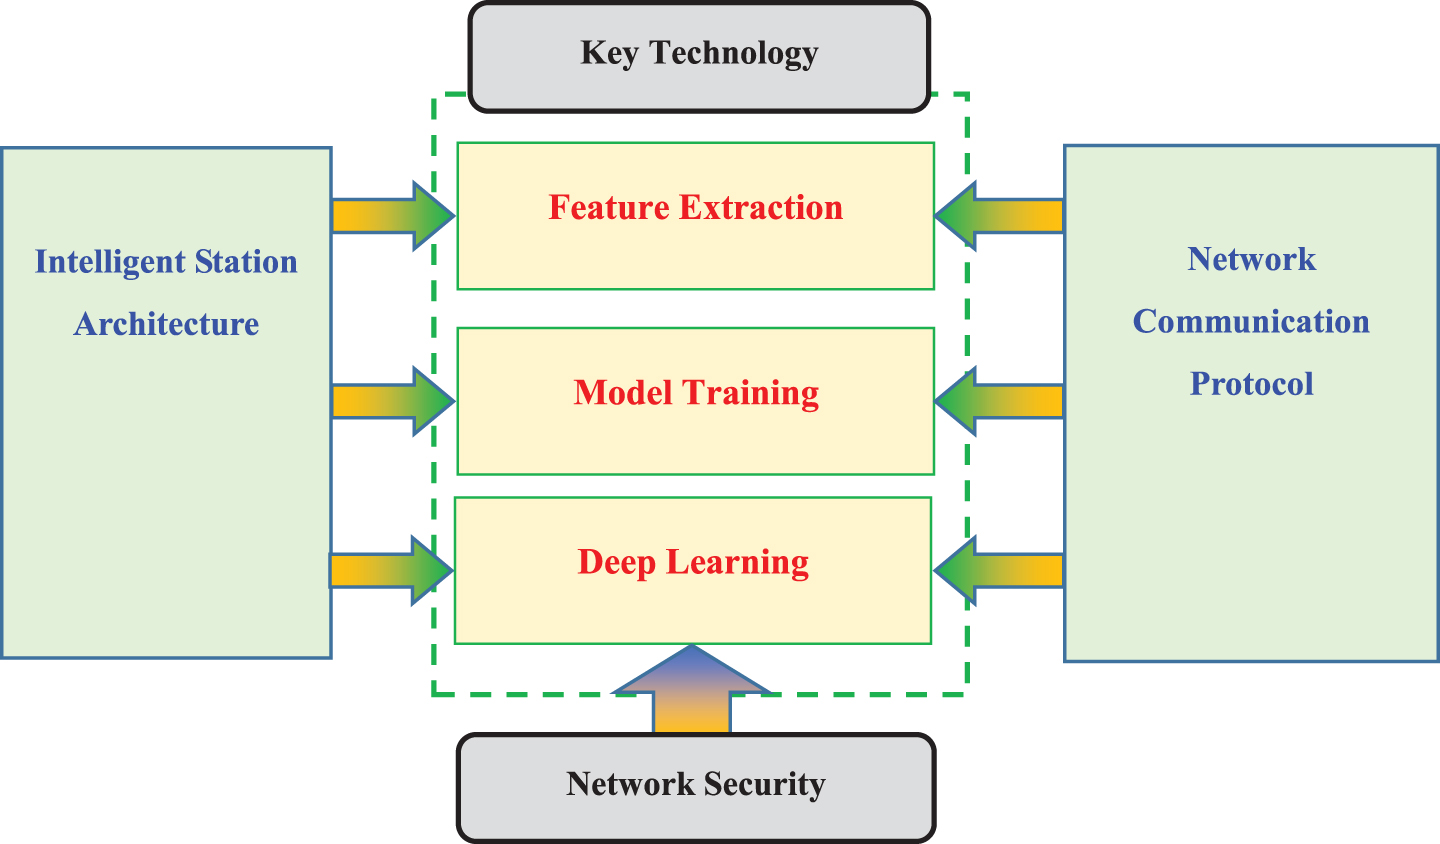 Security inspection platform based on multidimensional information intelligence perception.